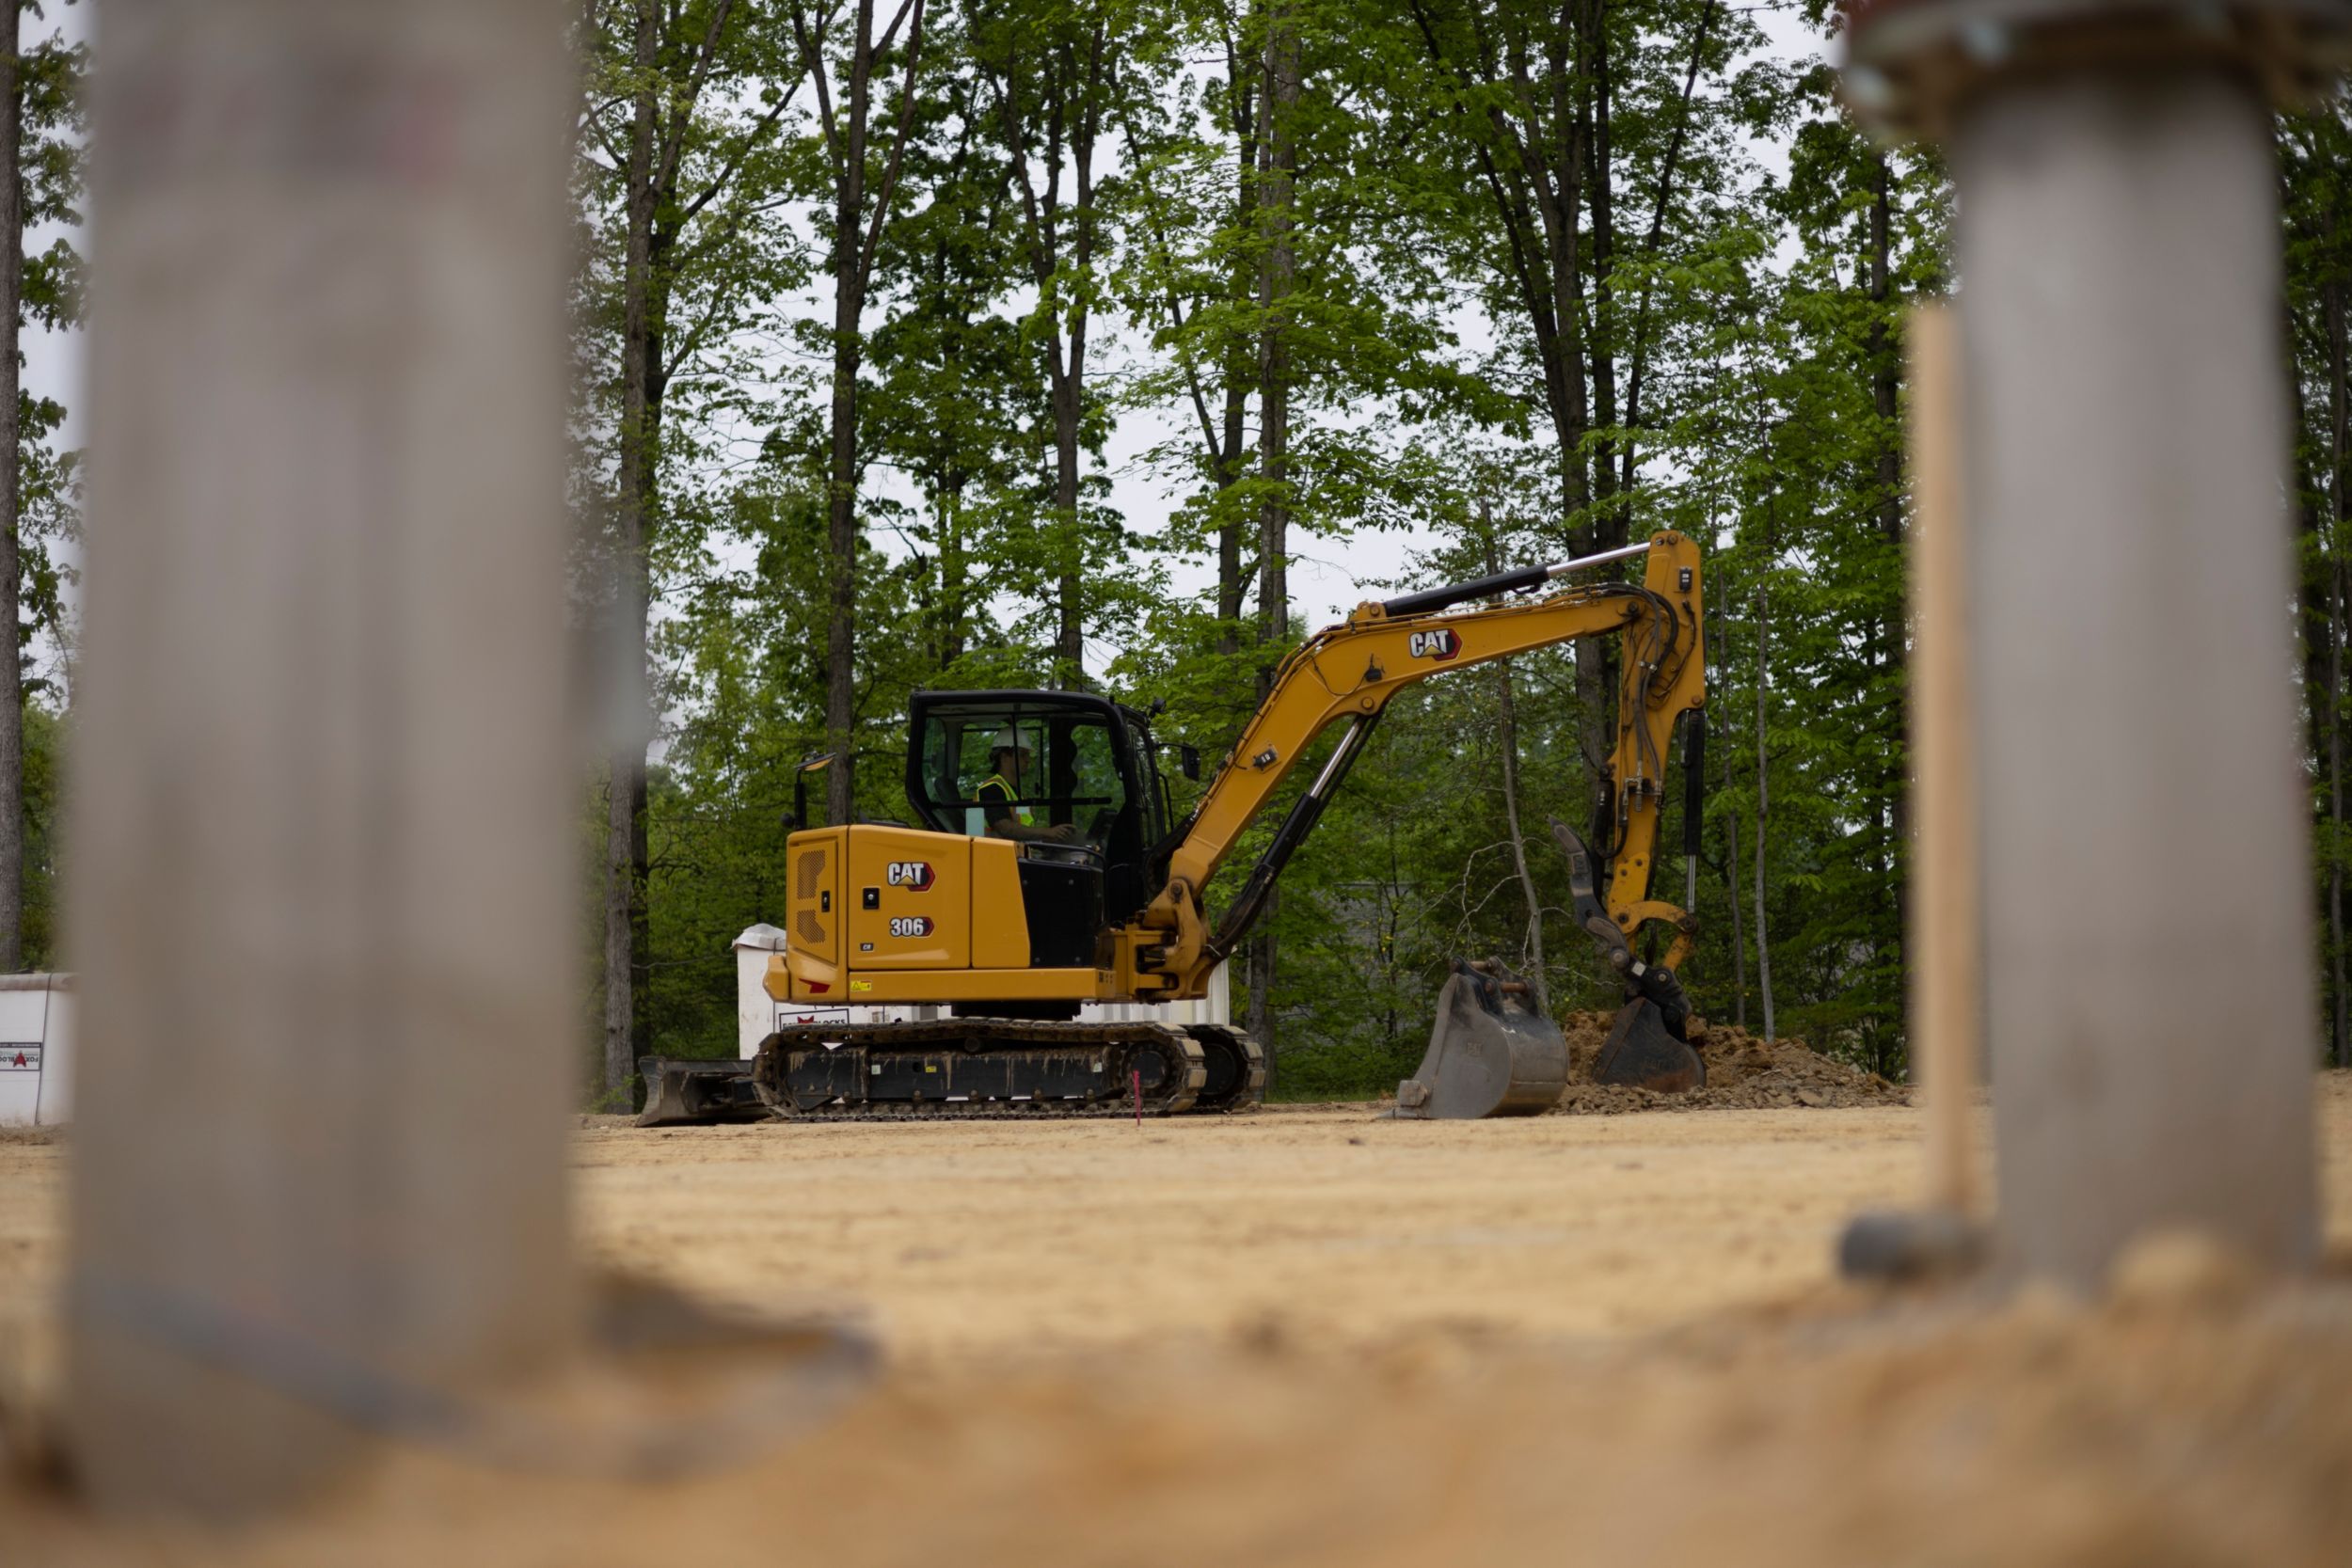 9 More Great Mini Excavator Attachments To Rent